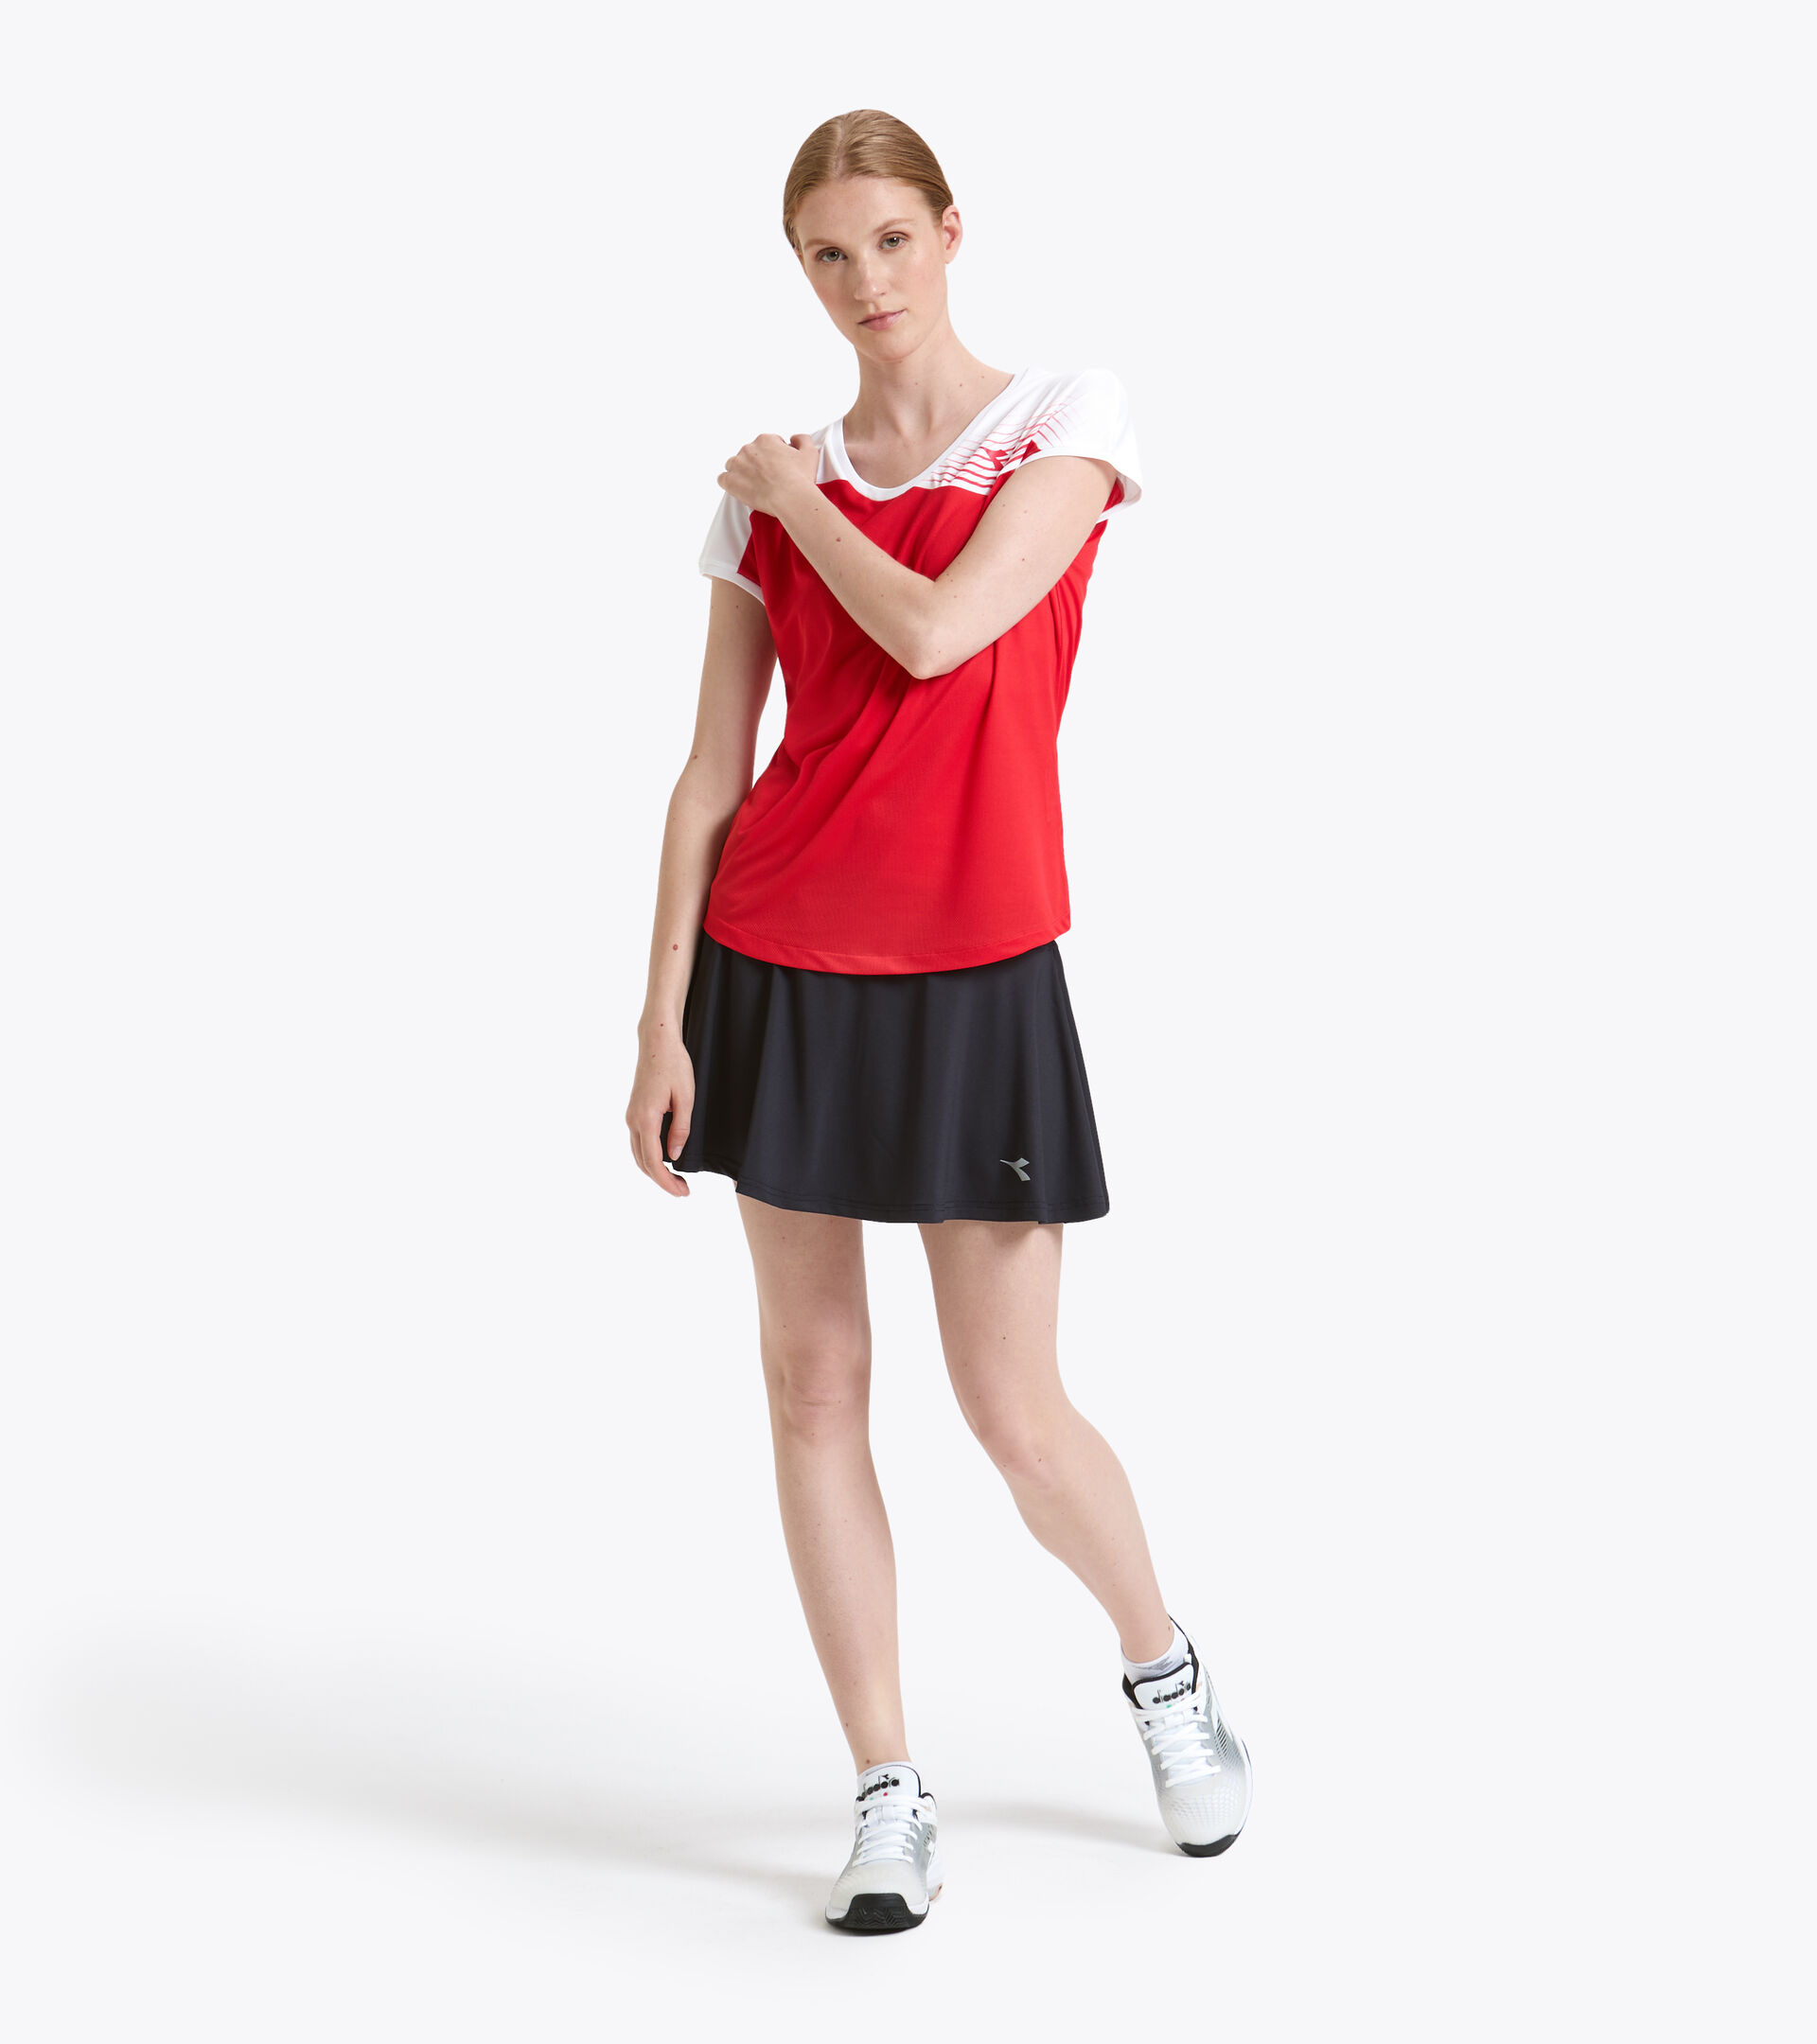 Camiseta de tenis - Mujer L. T-SHIRT COURT ROJO TOMATE - Diadora